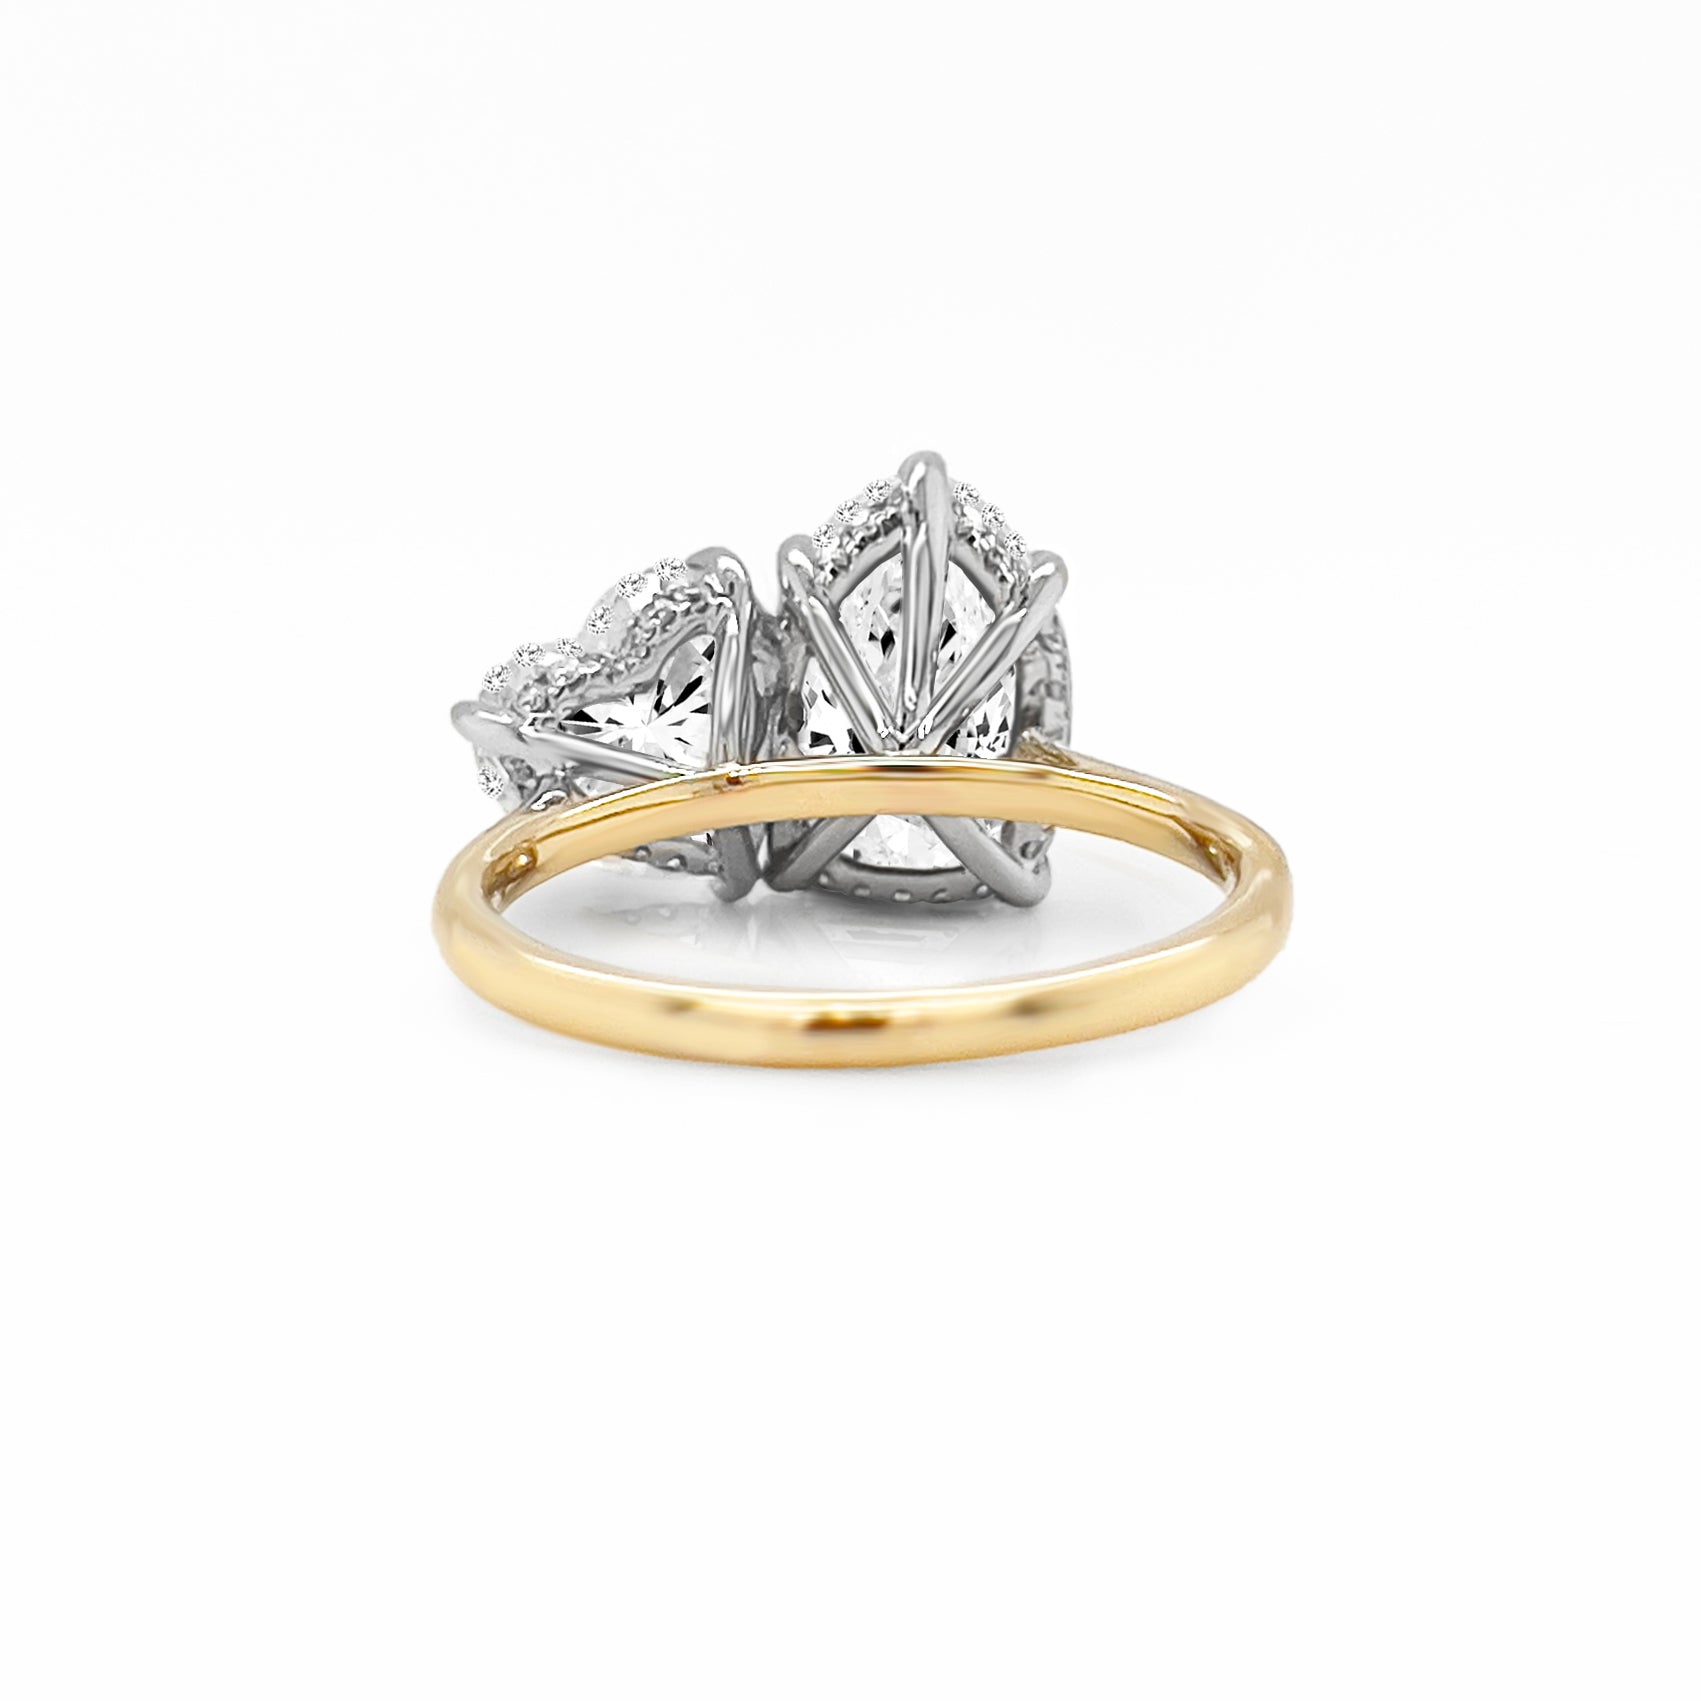 Sybella Engagement Ring